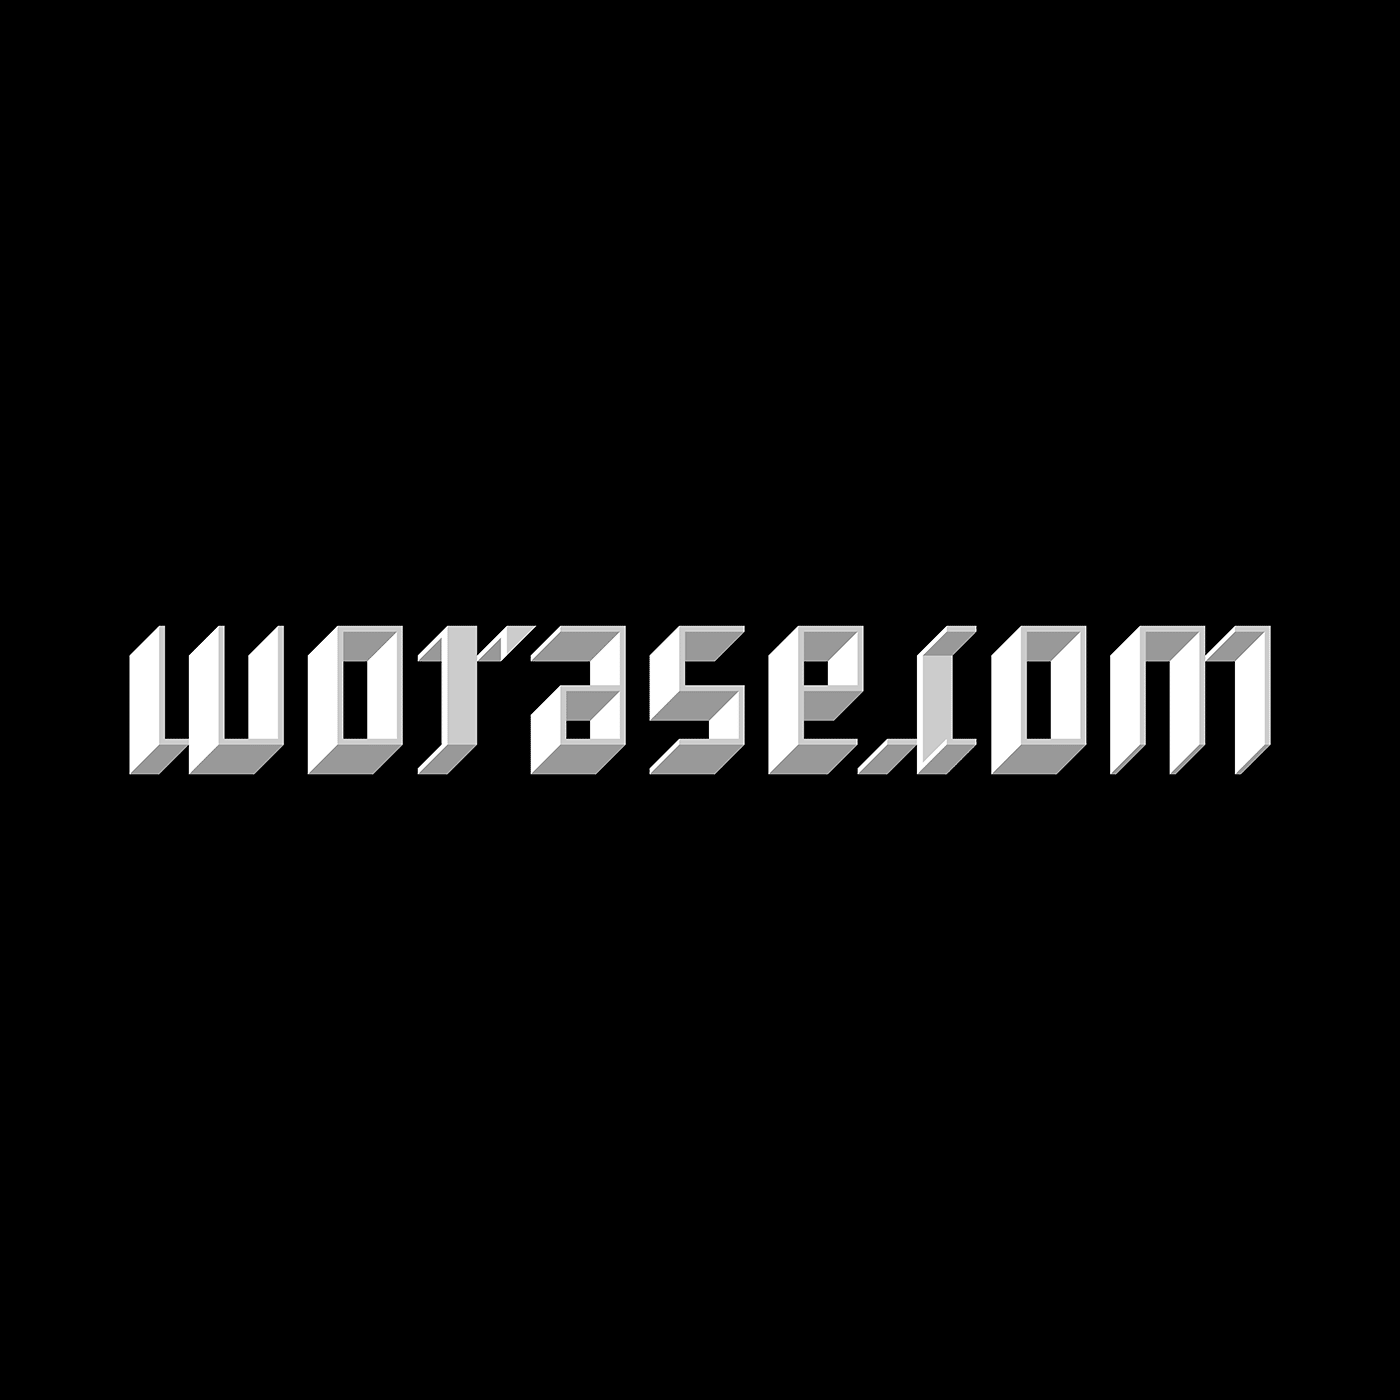 ambigram worase.com 3D letters